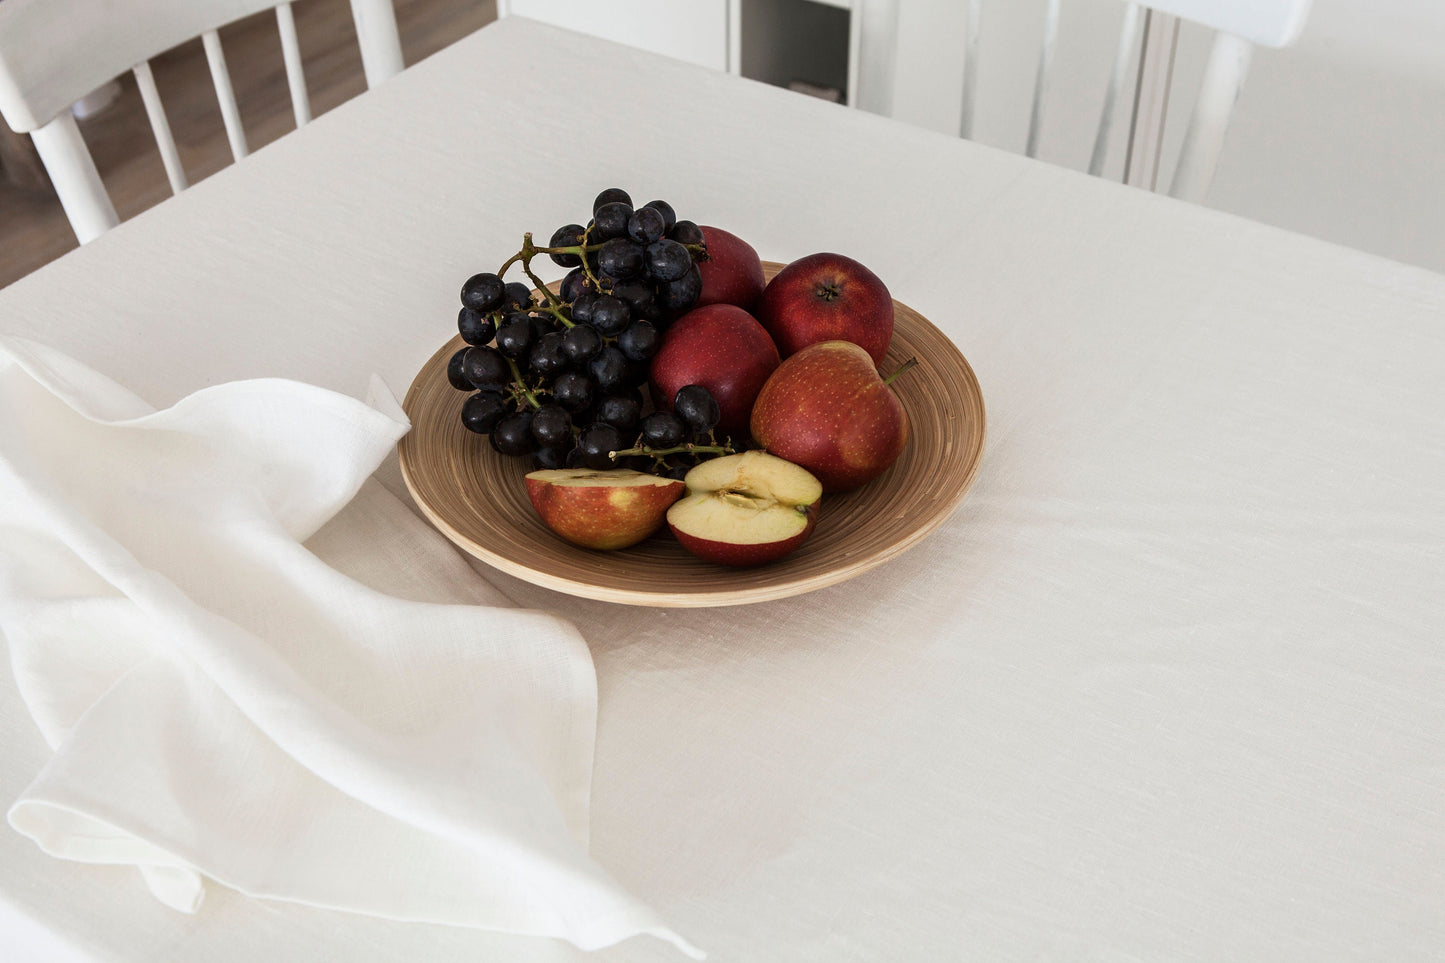 Organic Linen Tablecloth